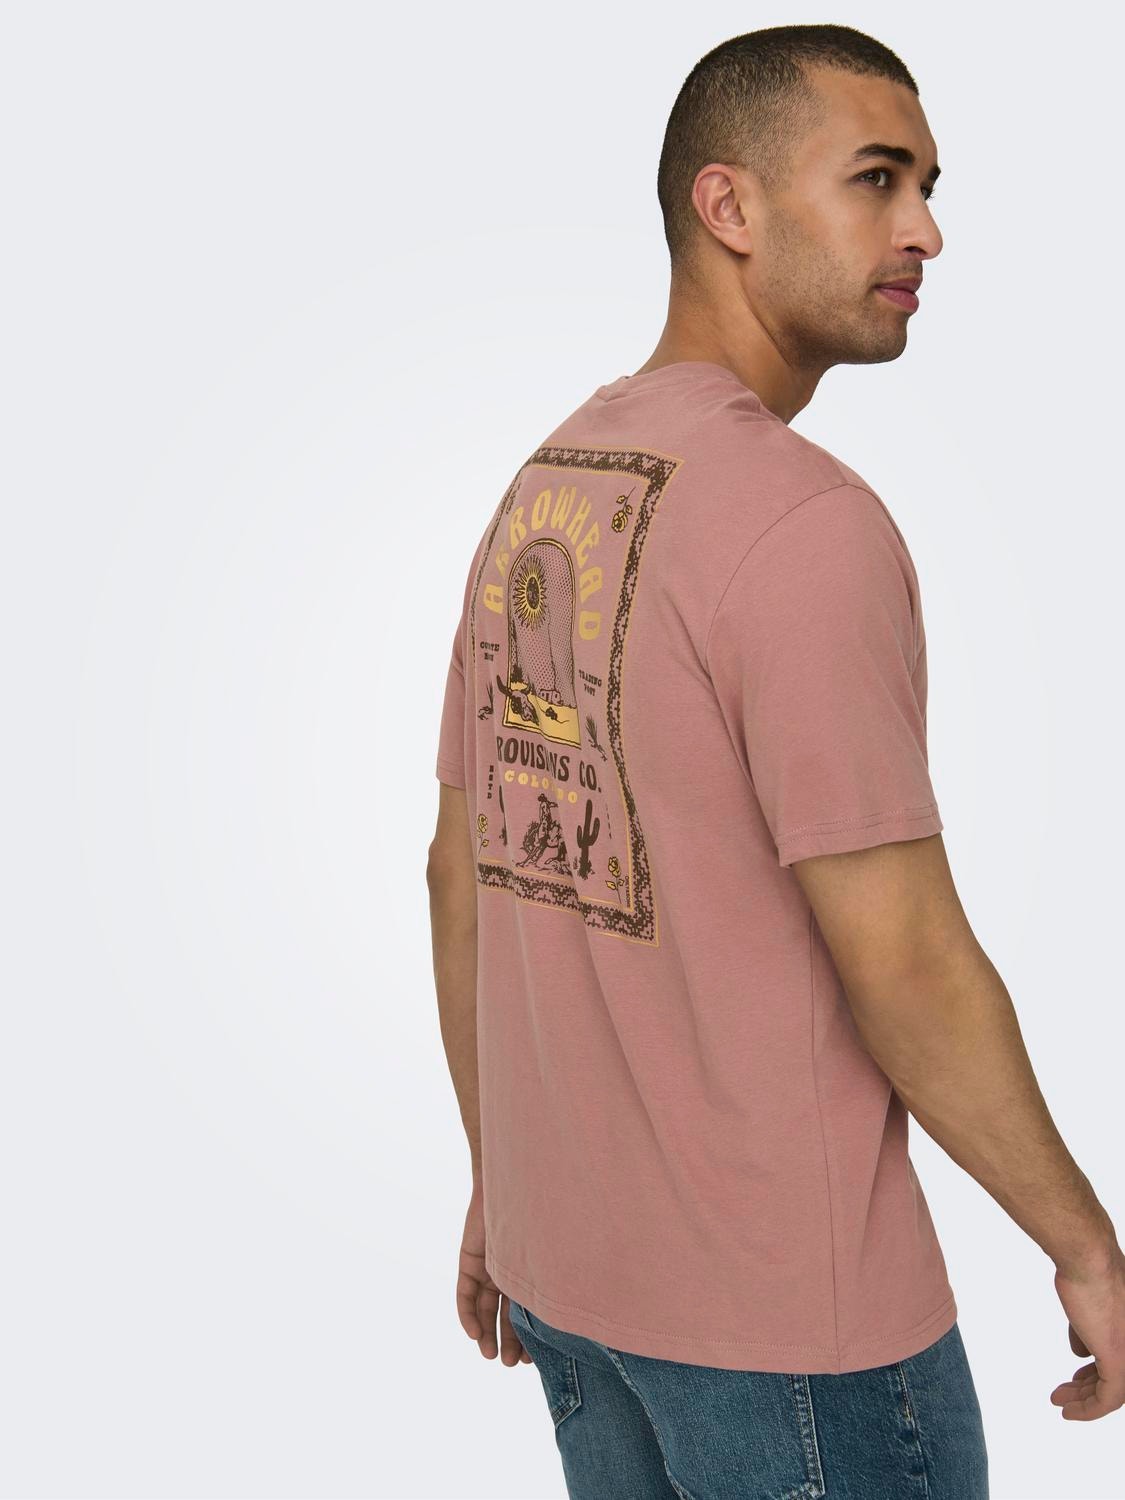 ONLY & SONS Normal geschnitten Rundhals T-Shirt -Burlwood - 22029483